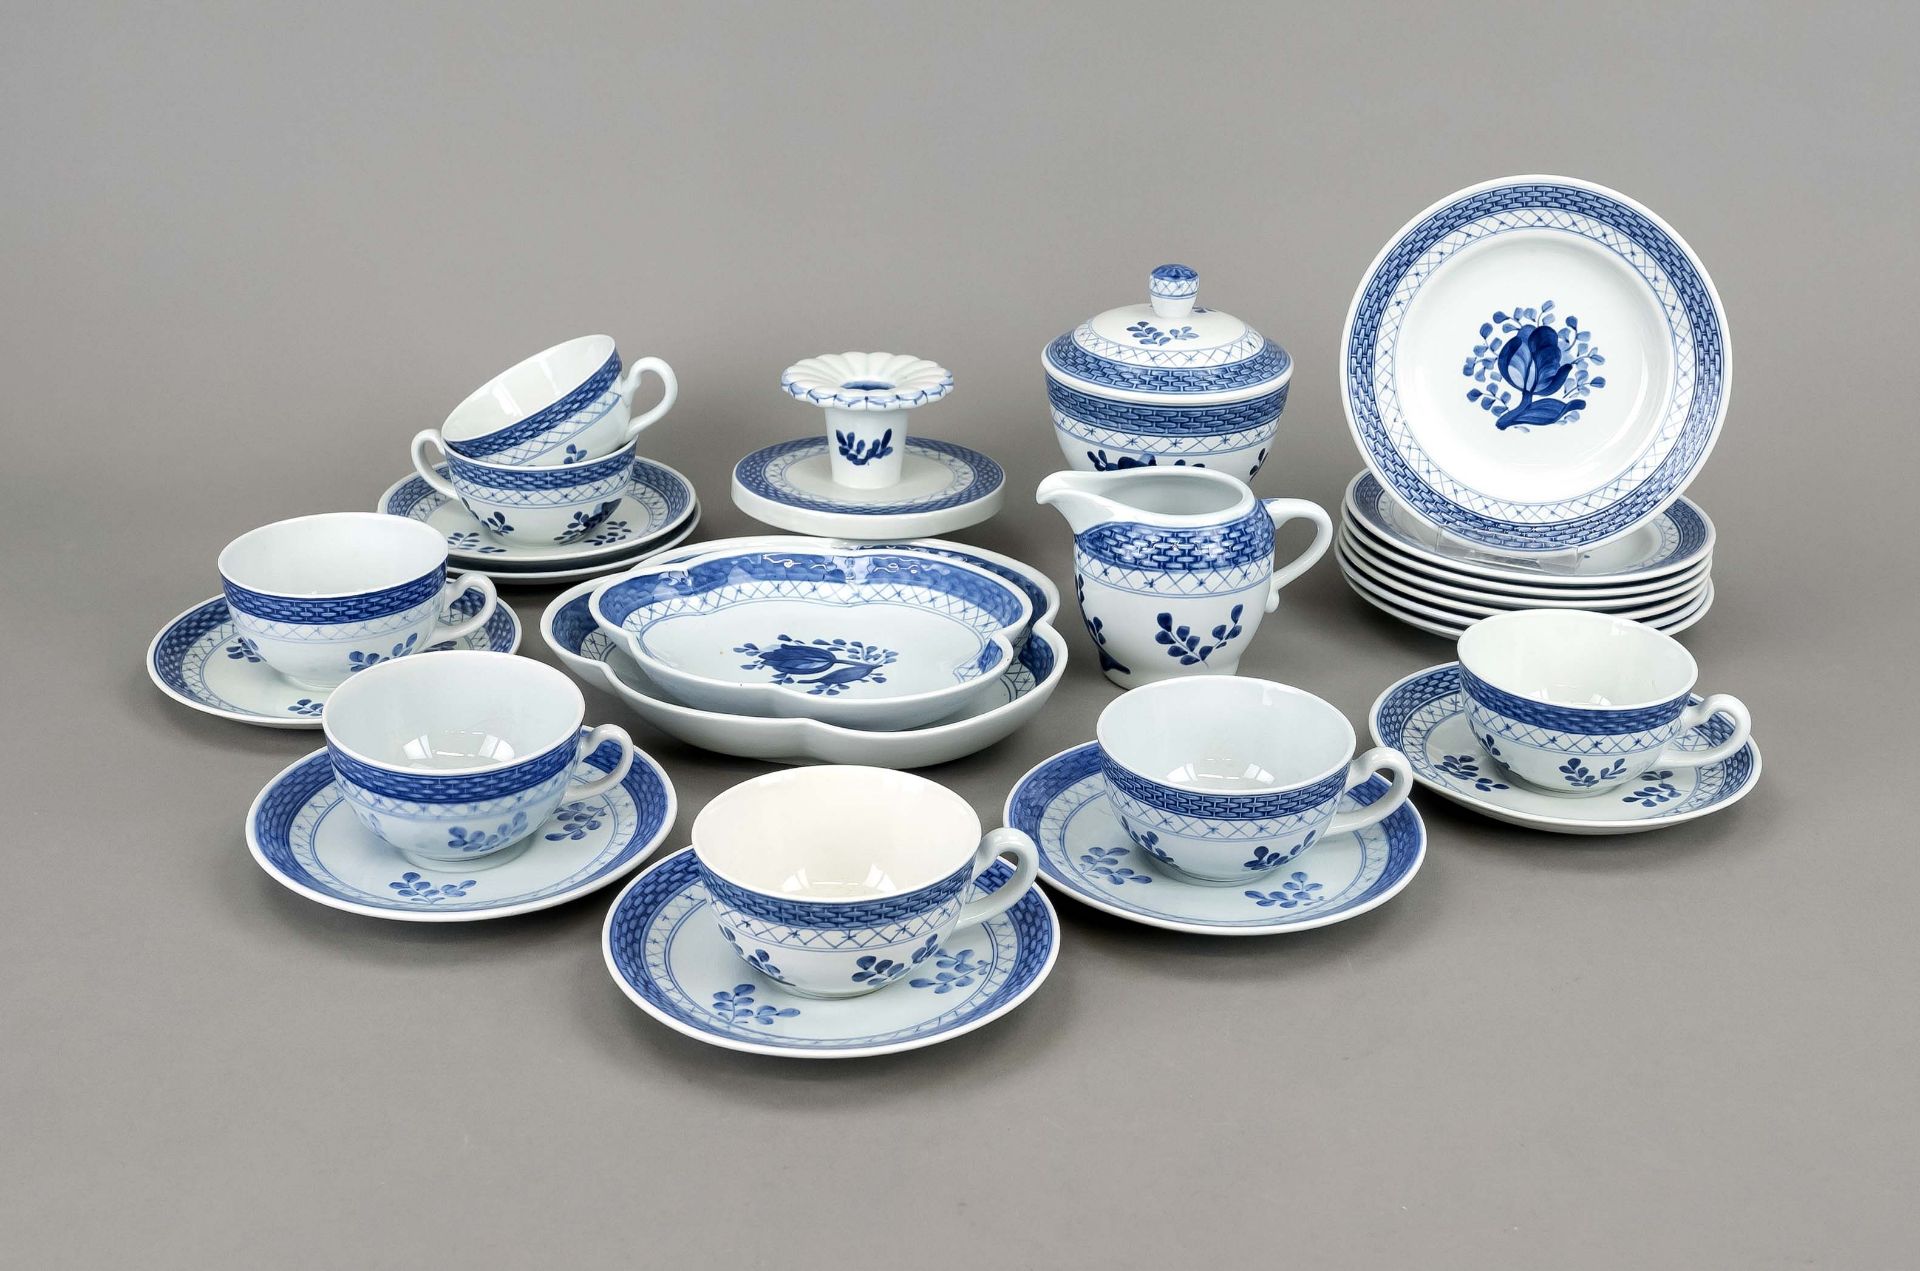 Tea service for 7 persons, 26-piece, Aluminia faience, Royal Copenhagen, 20th century, '